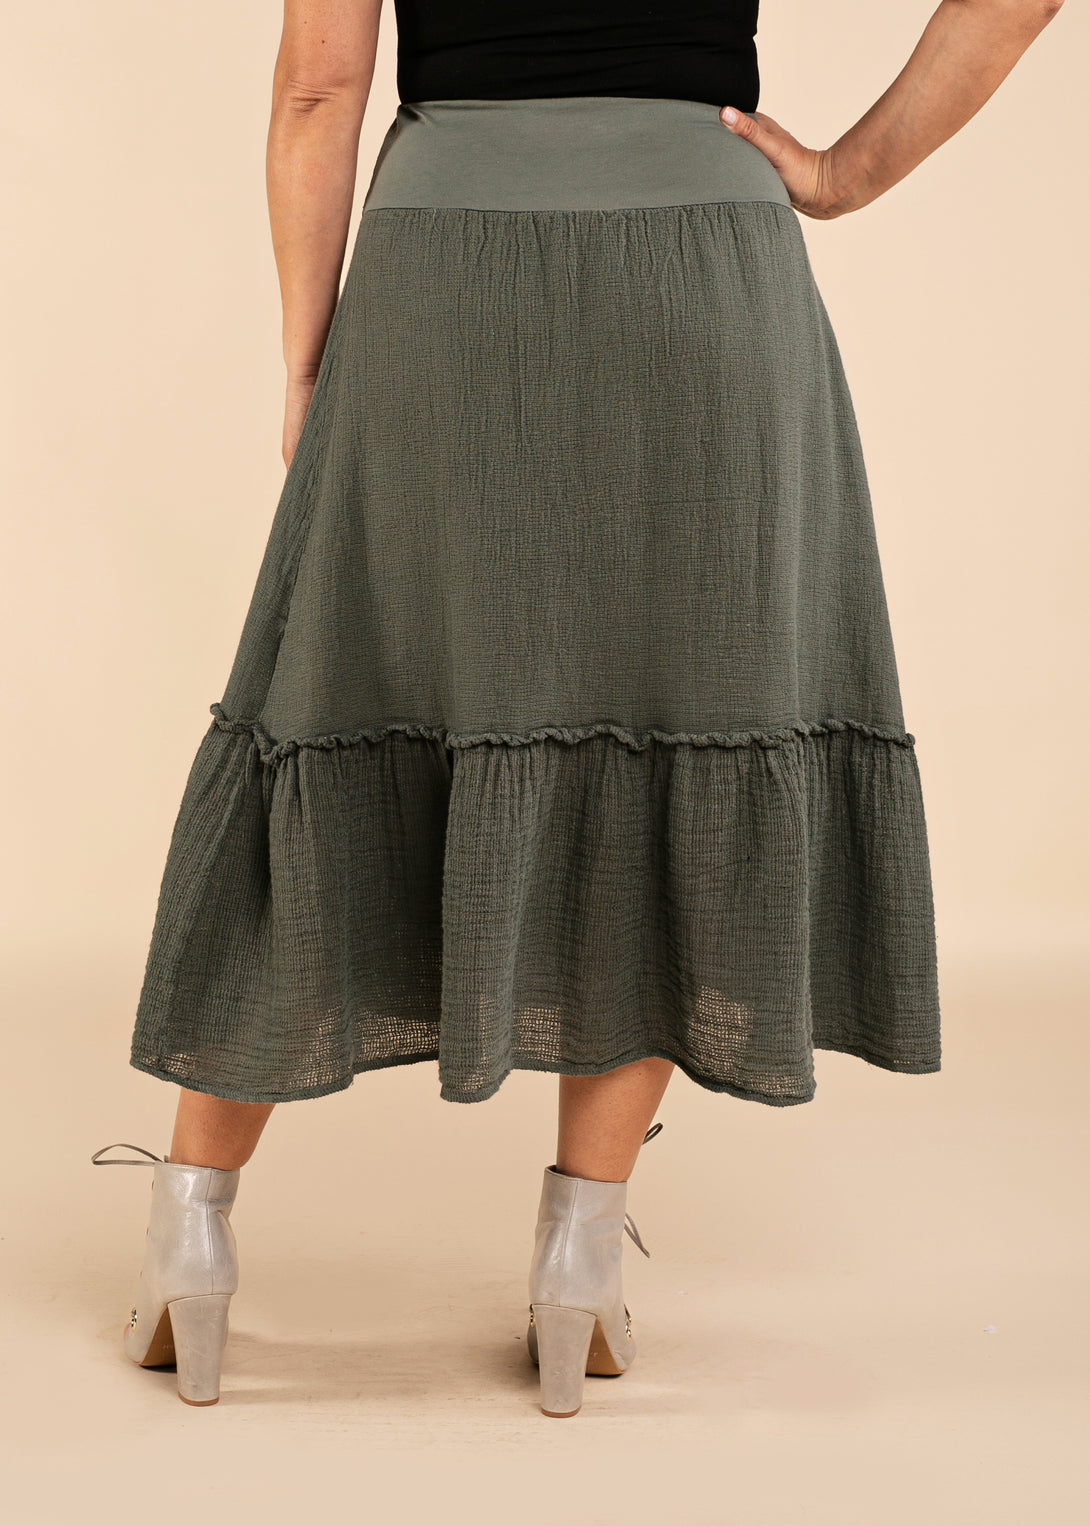 Elva Linen Skirt in Khaki - Imagine Fashion